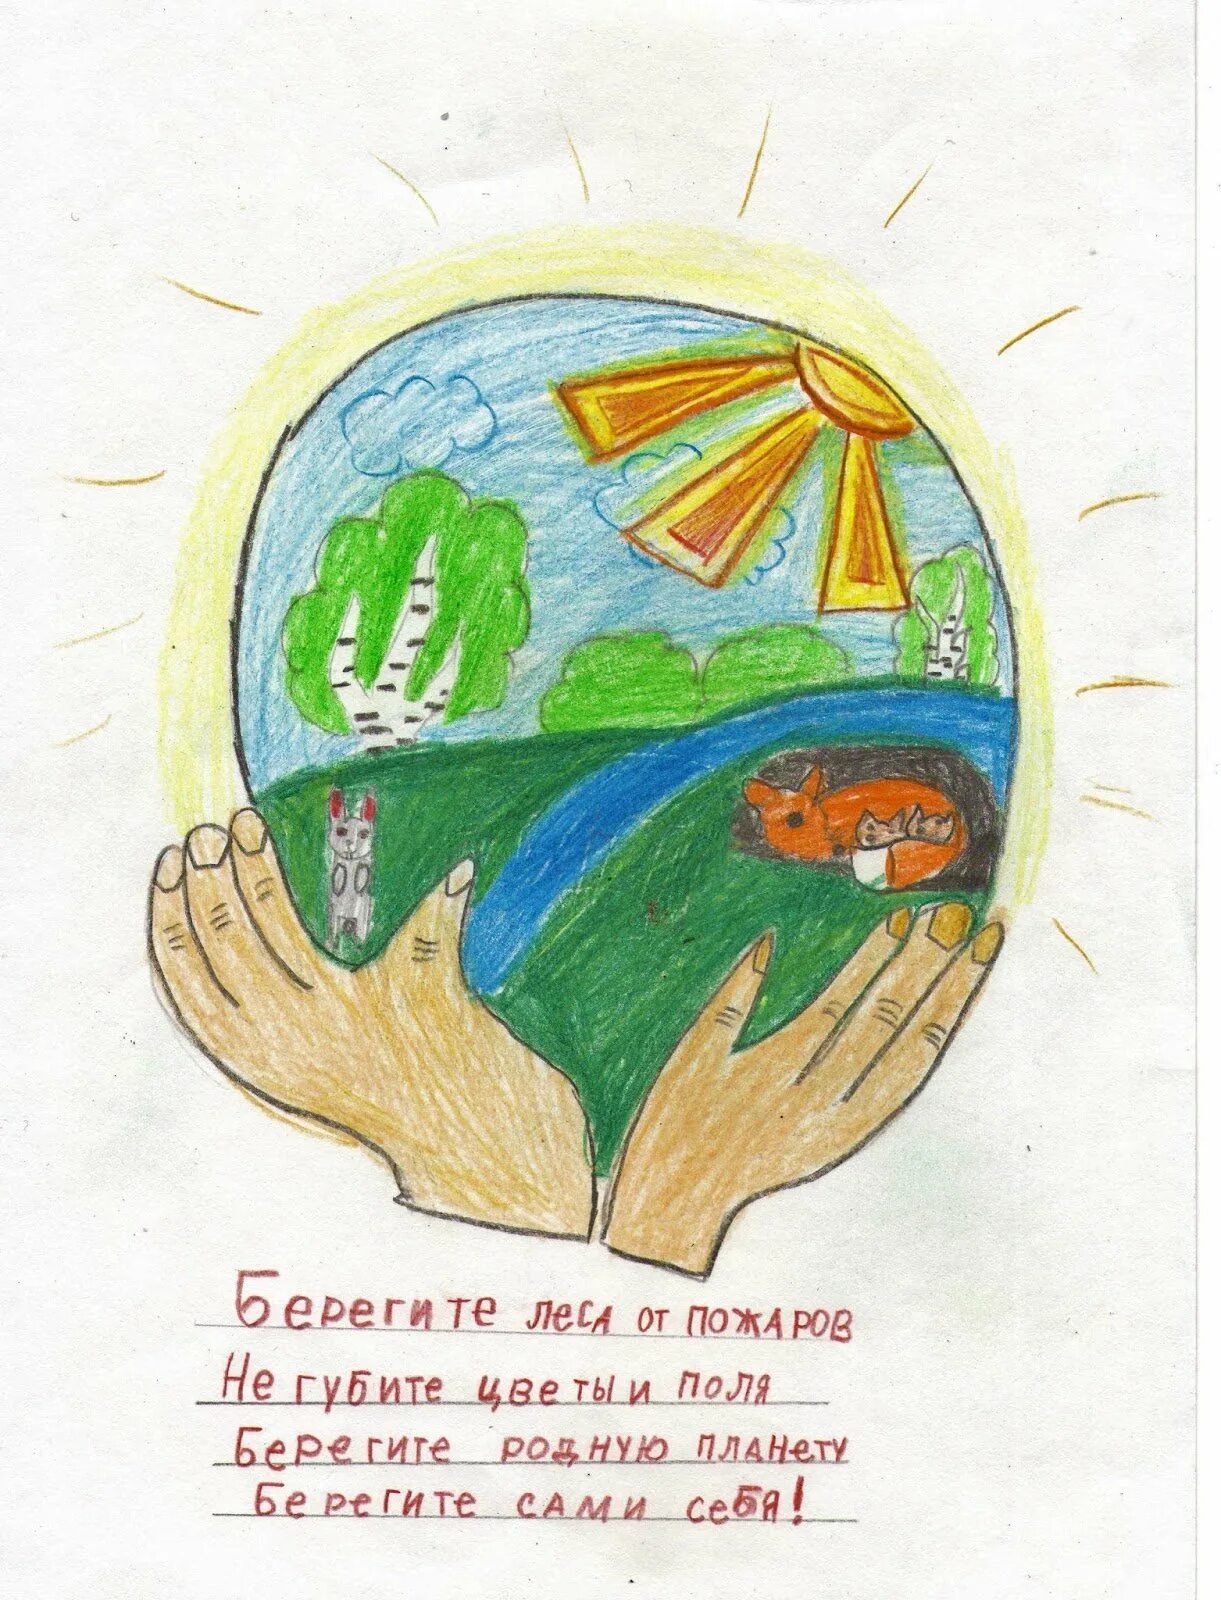 15 Апреля день экологических знаний. 15 Апреля день экологических знаний рисунки. День экологических знаний плакат.